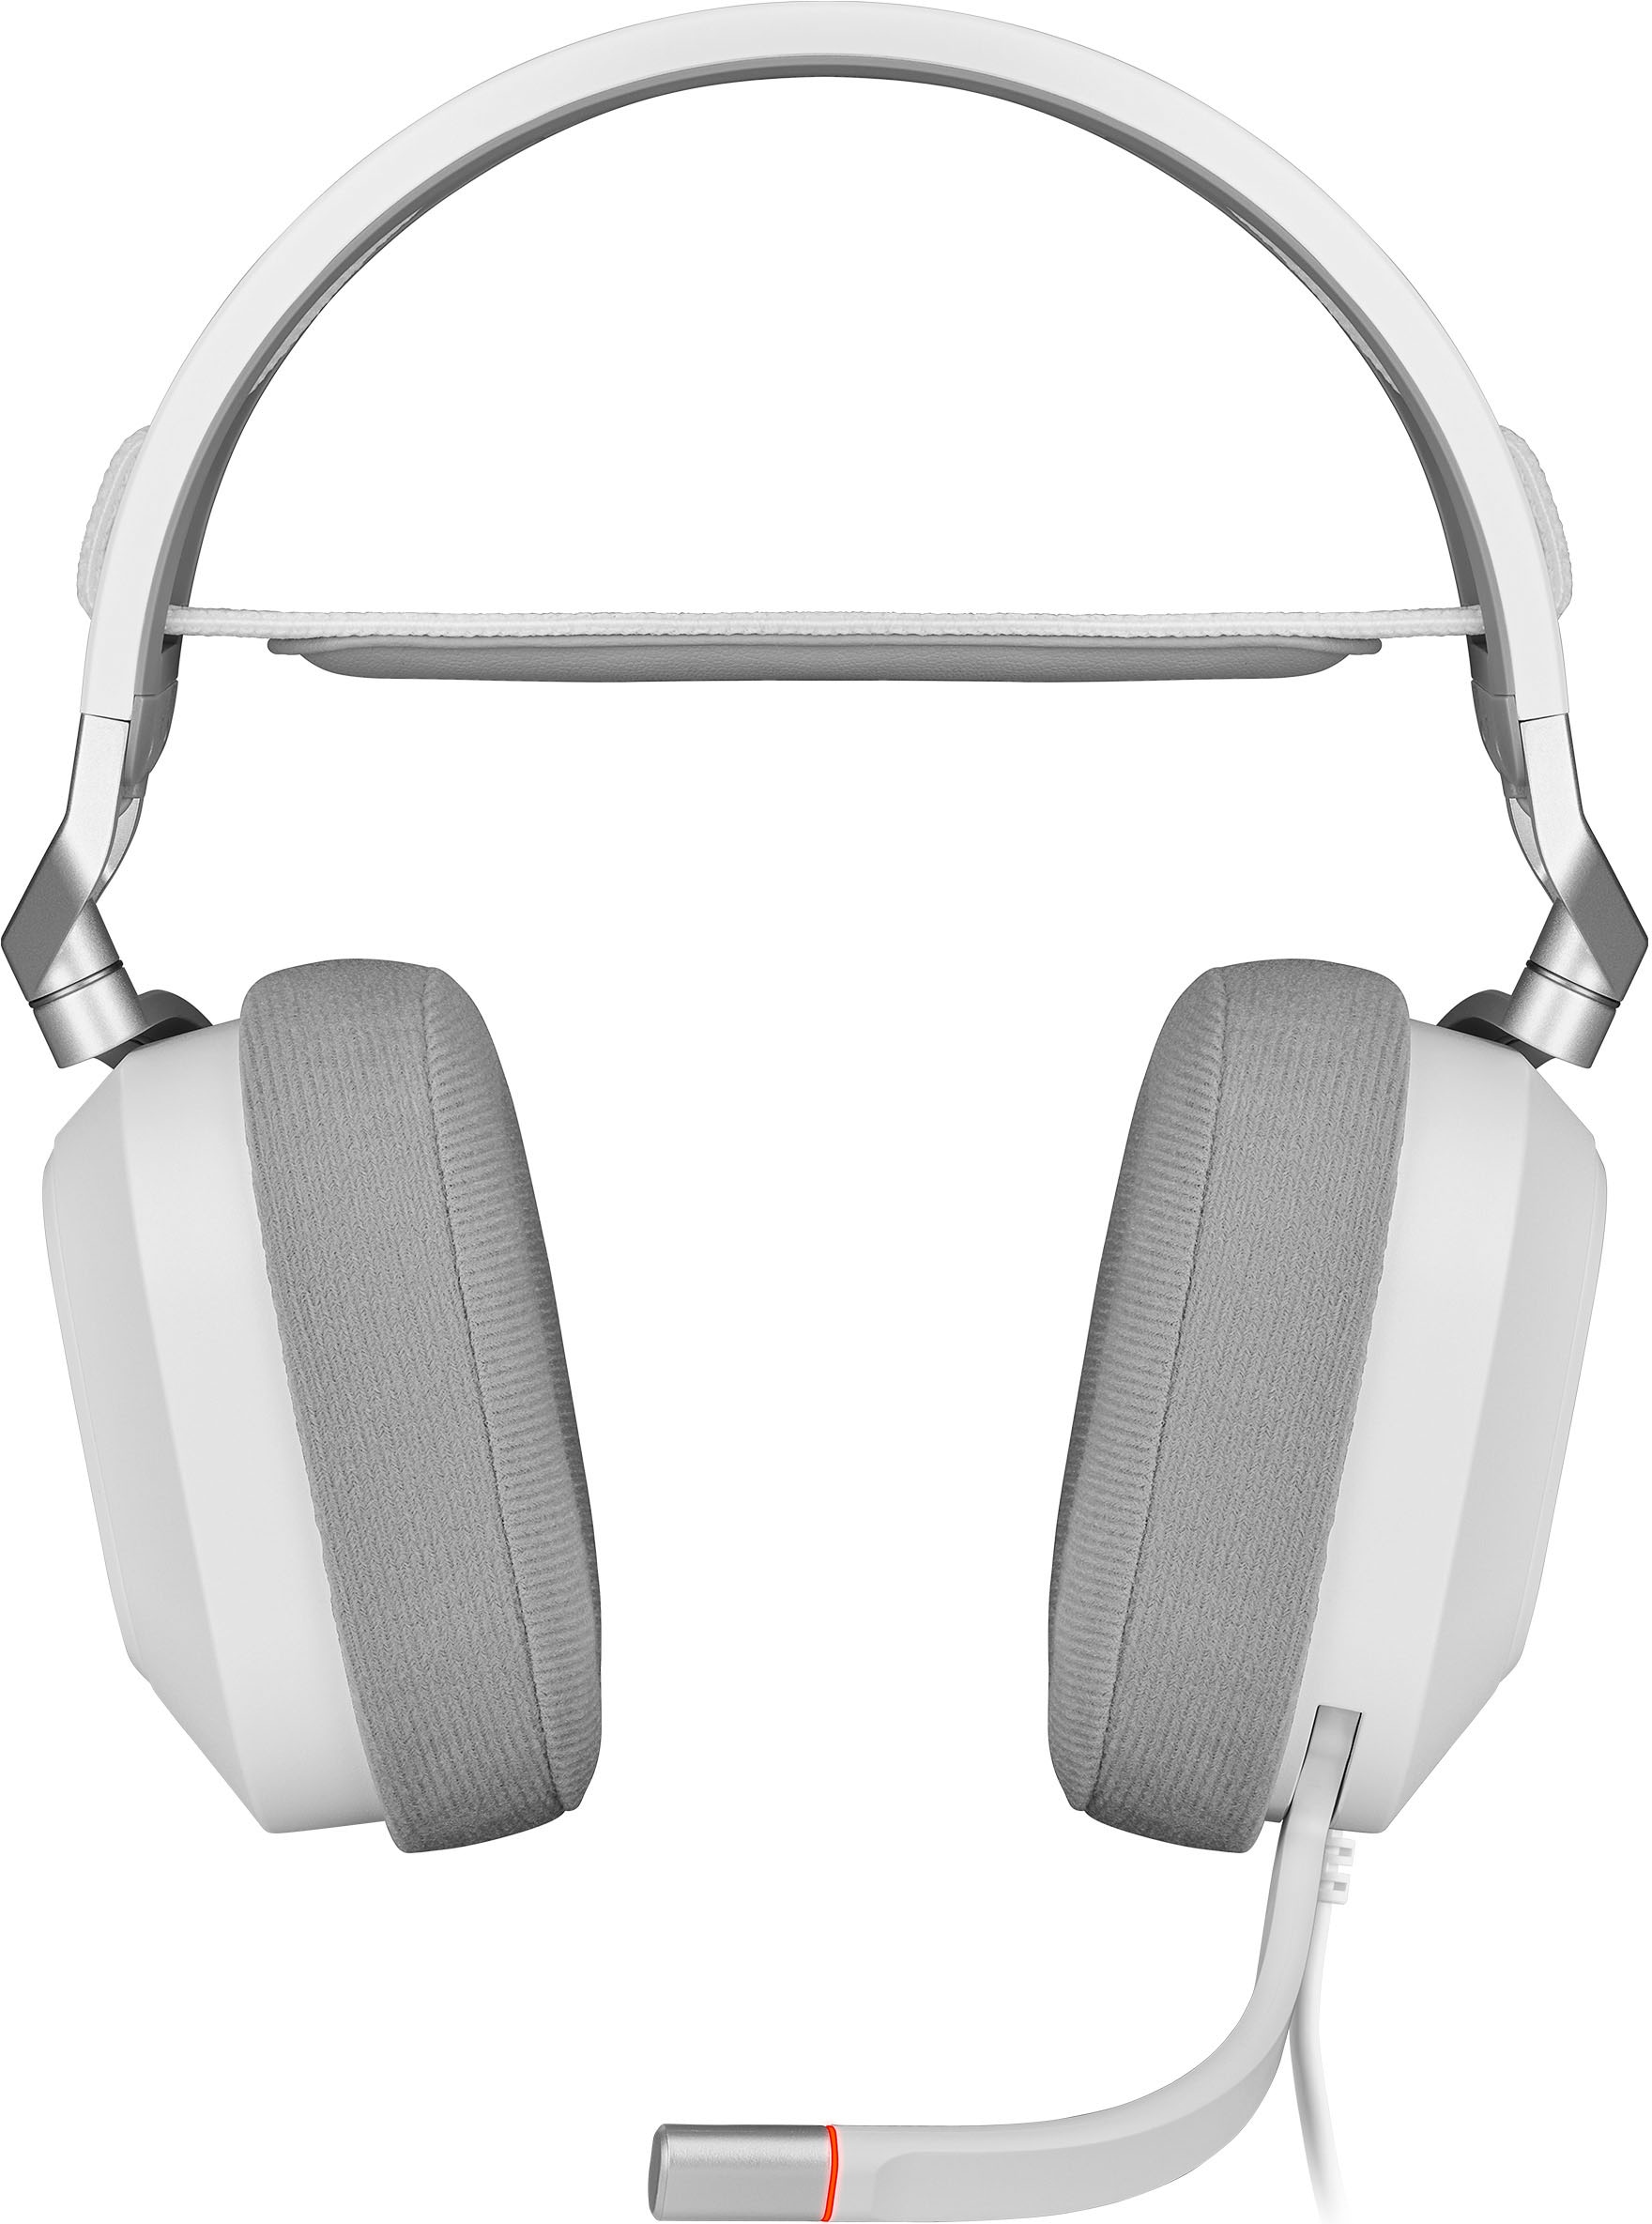 Corsair Gaming-Headset »HS80«, Premium, SURROUND